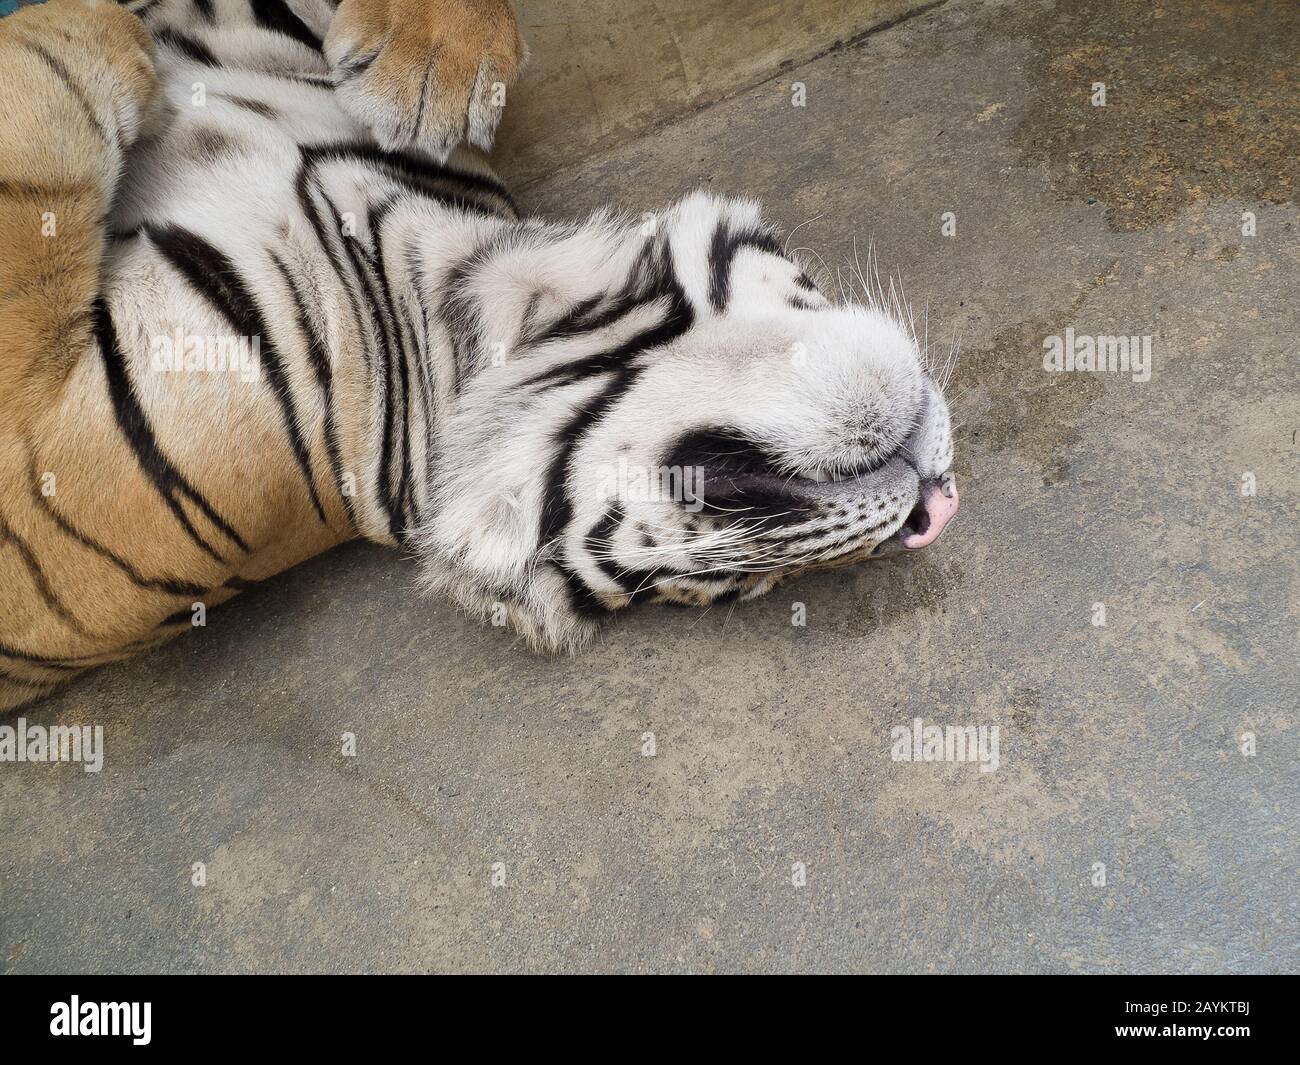 Tiger in Tiger Kingdom, Chiang Mai, Thailand. Stock Photo